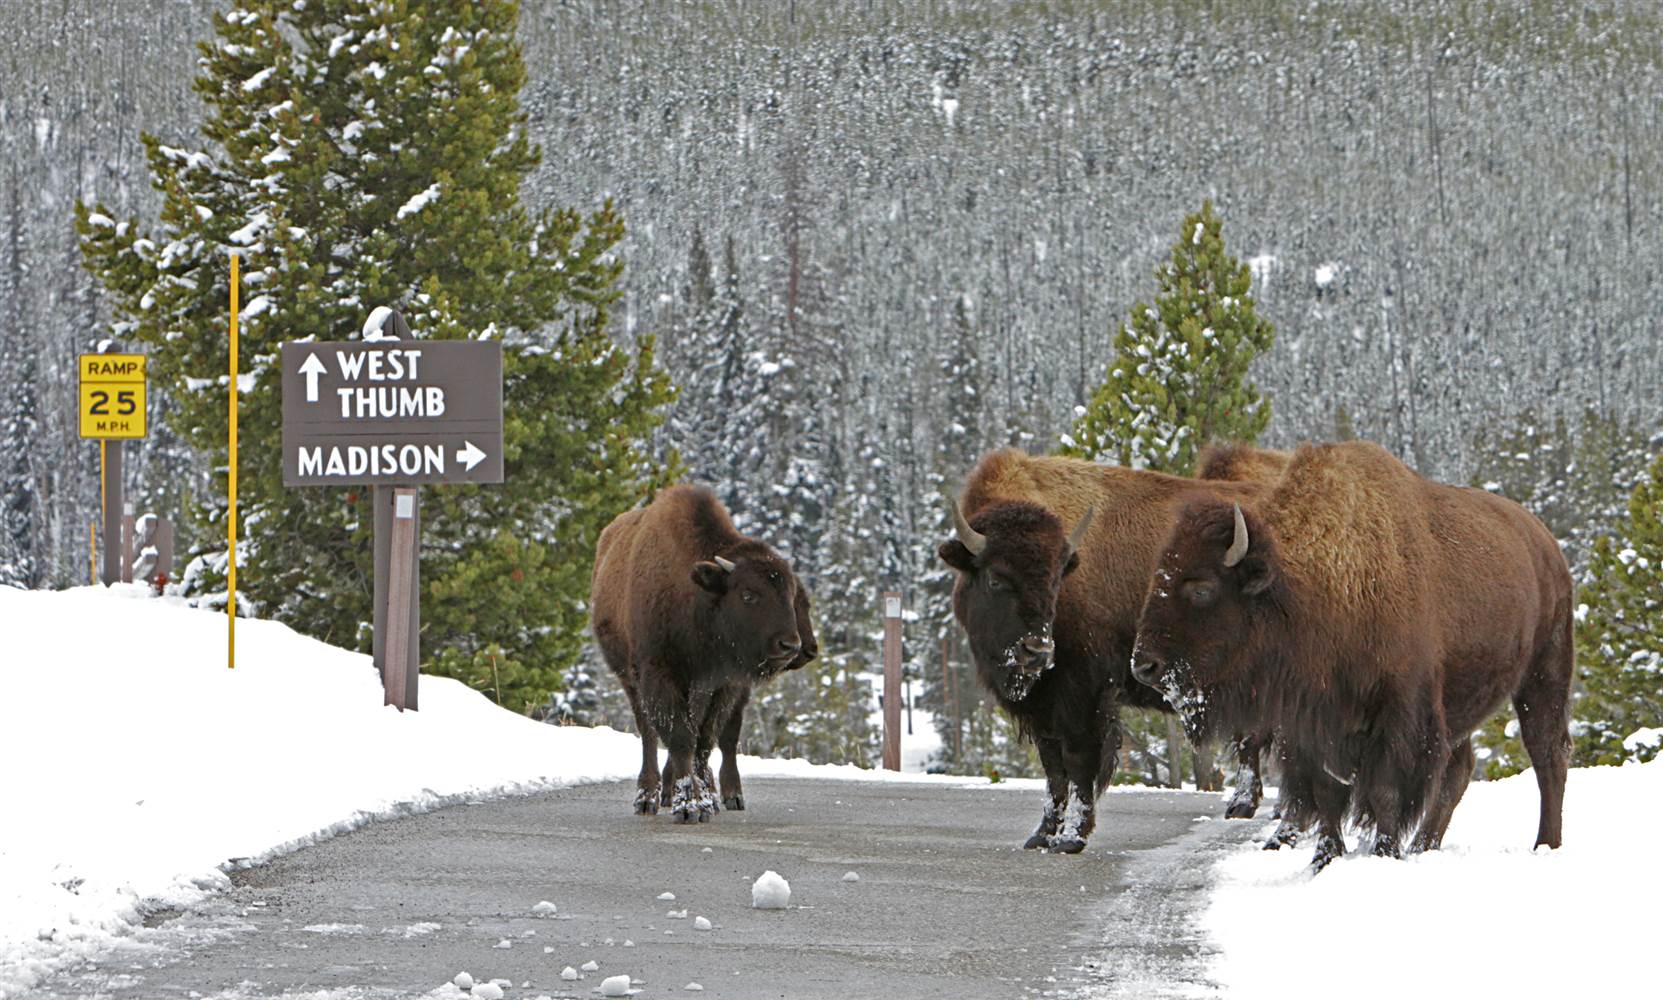 bison, nps, national park service, fee increase, maintenance